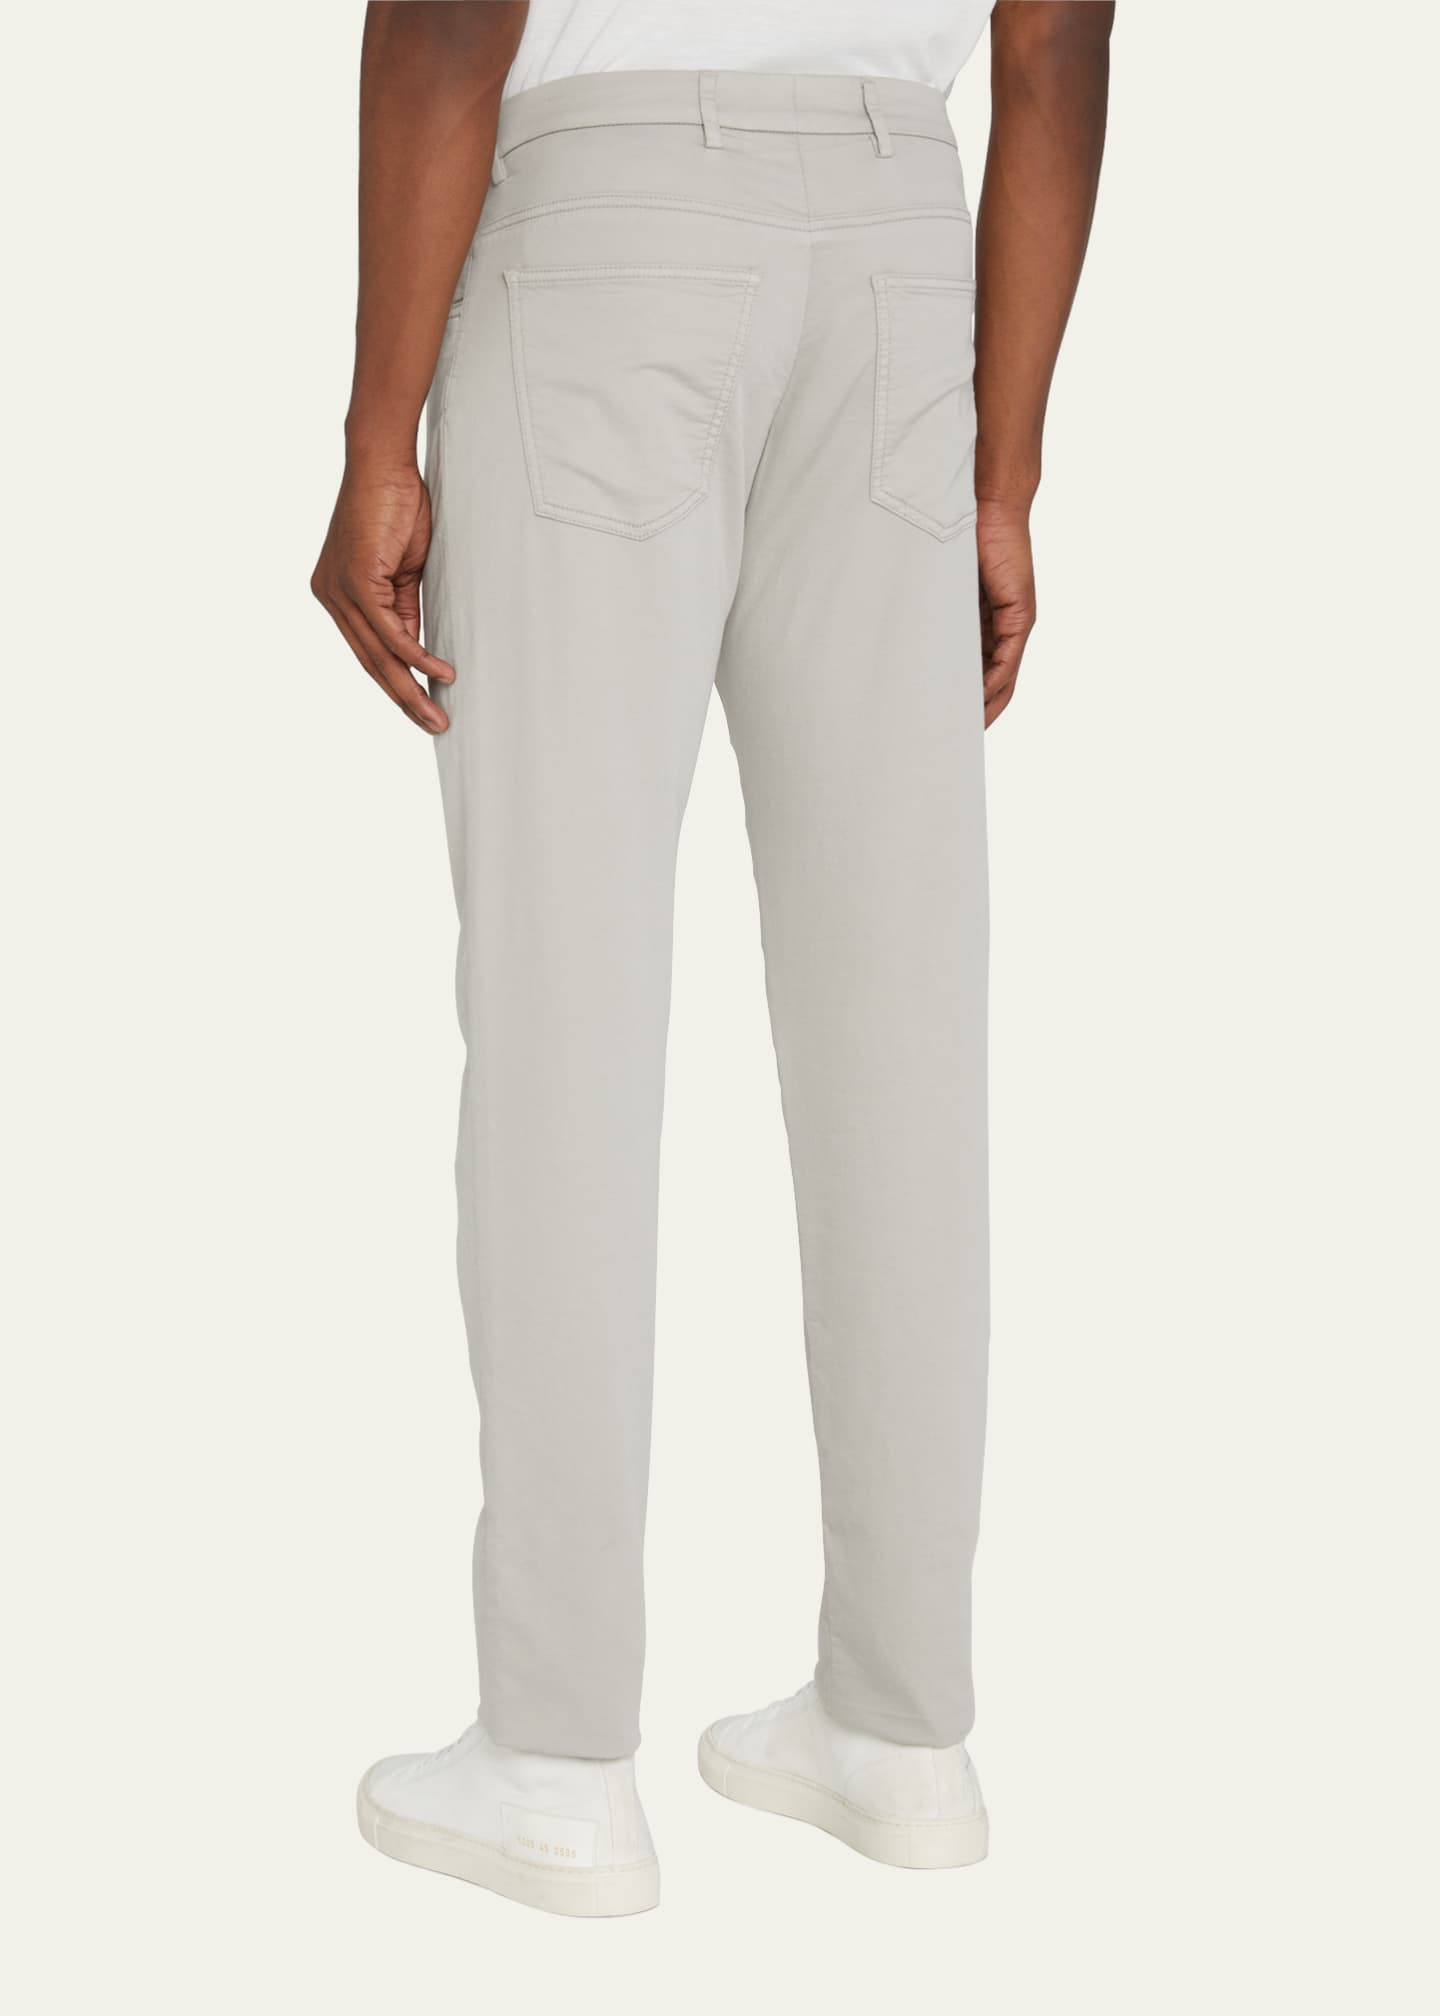 Zanella Men's Garment-Dyed Active Pants - Bergdorf Goodman